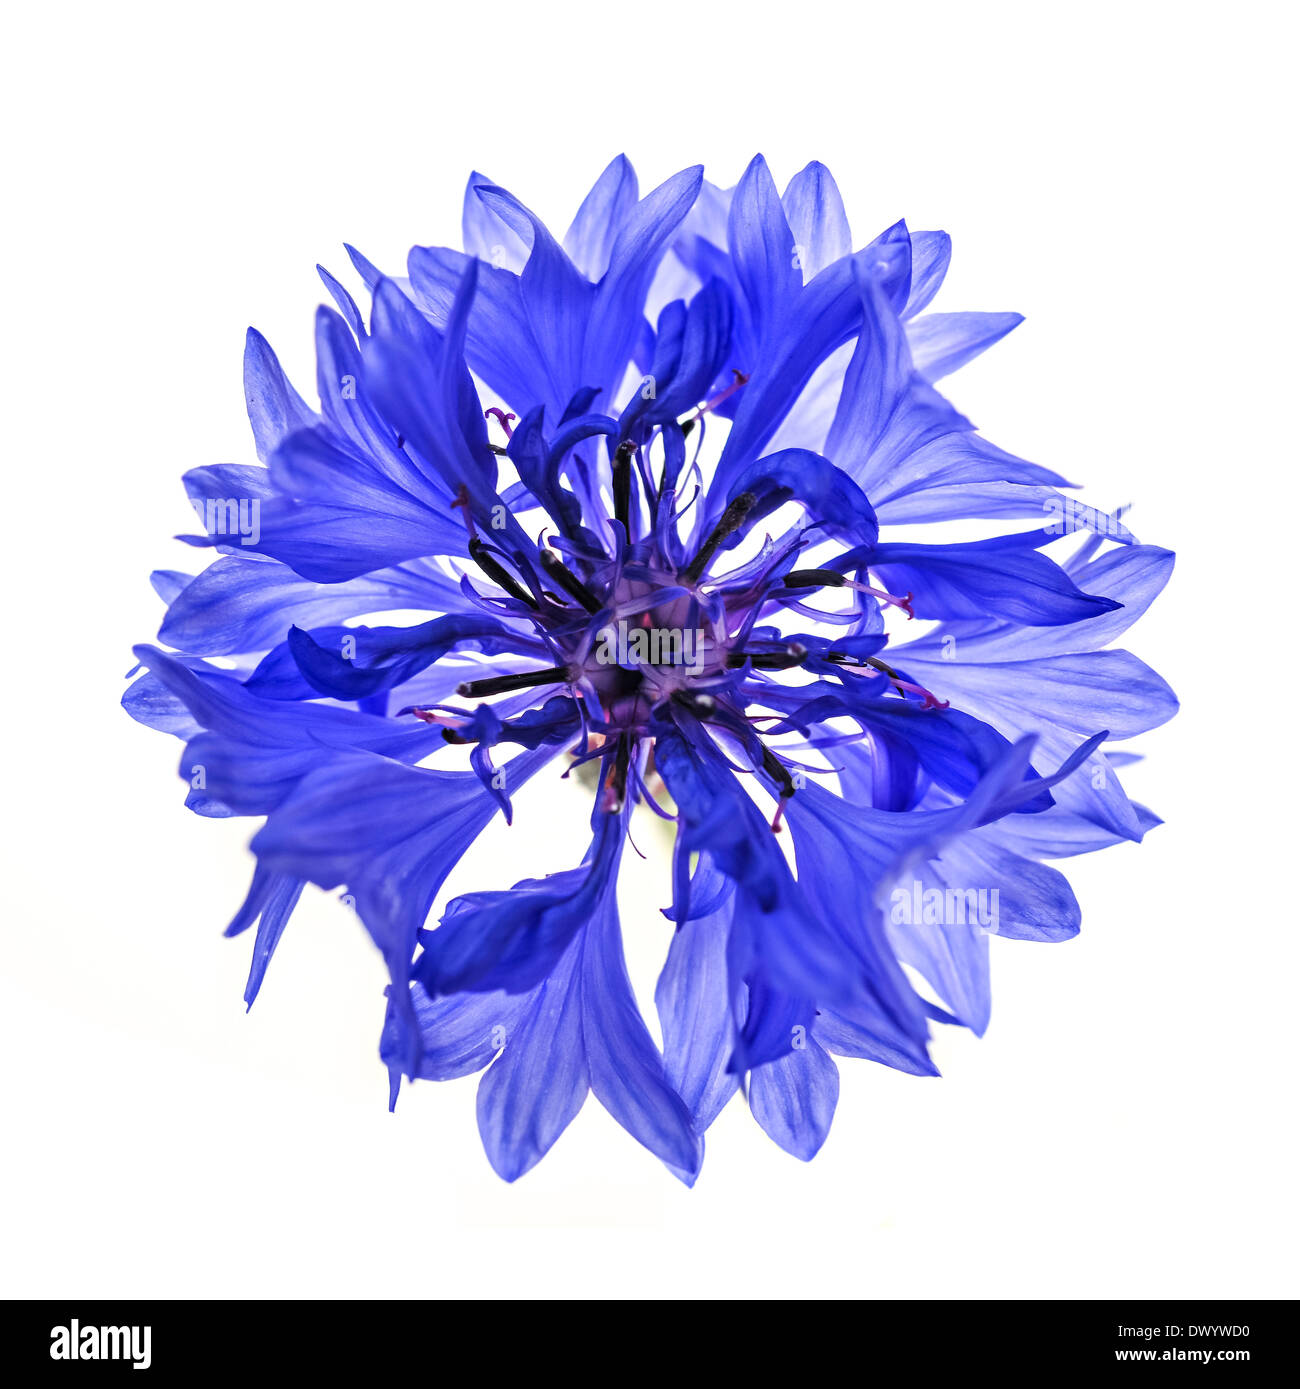 One blue cornflower flower isolated on white background, studio shot from above. Stock Photo